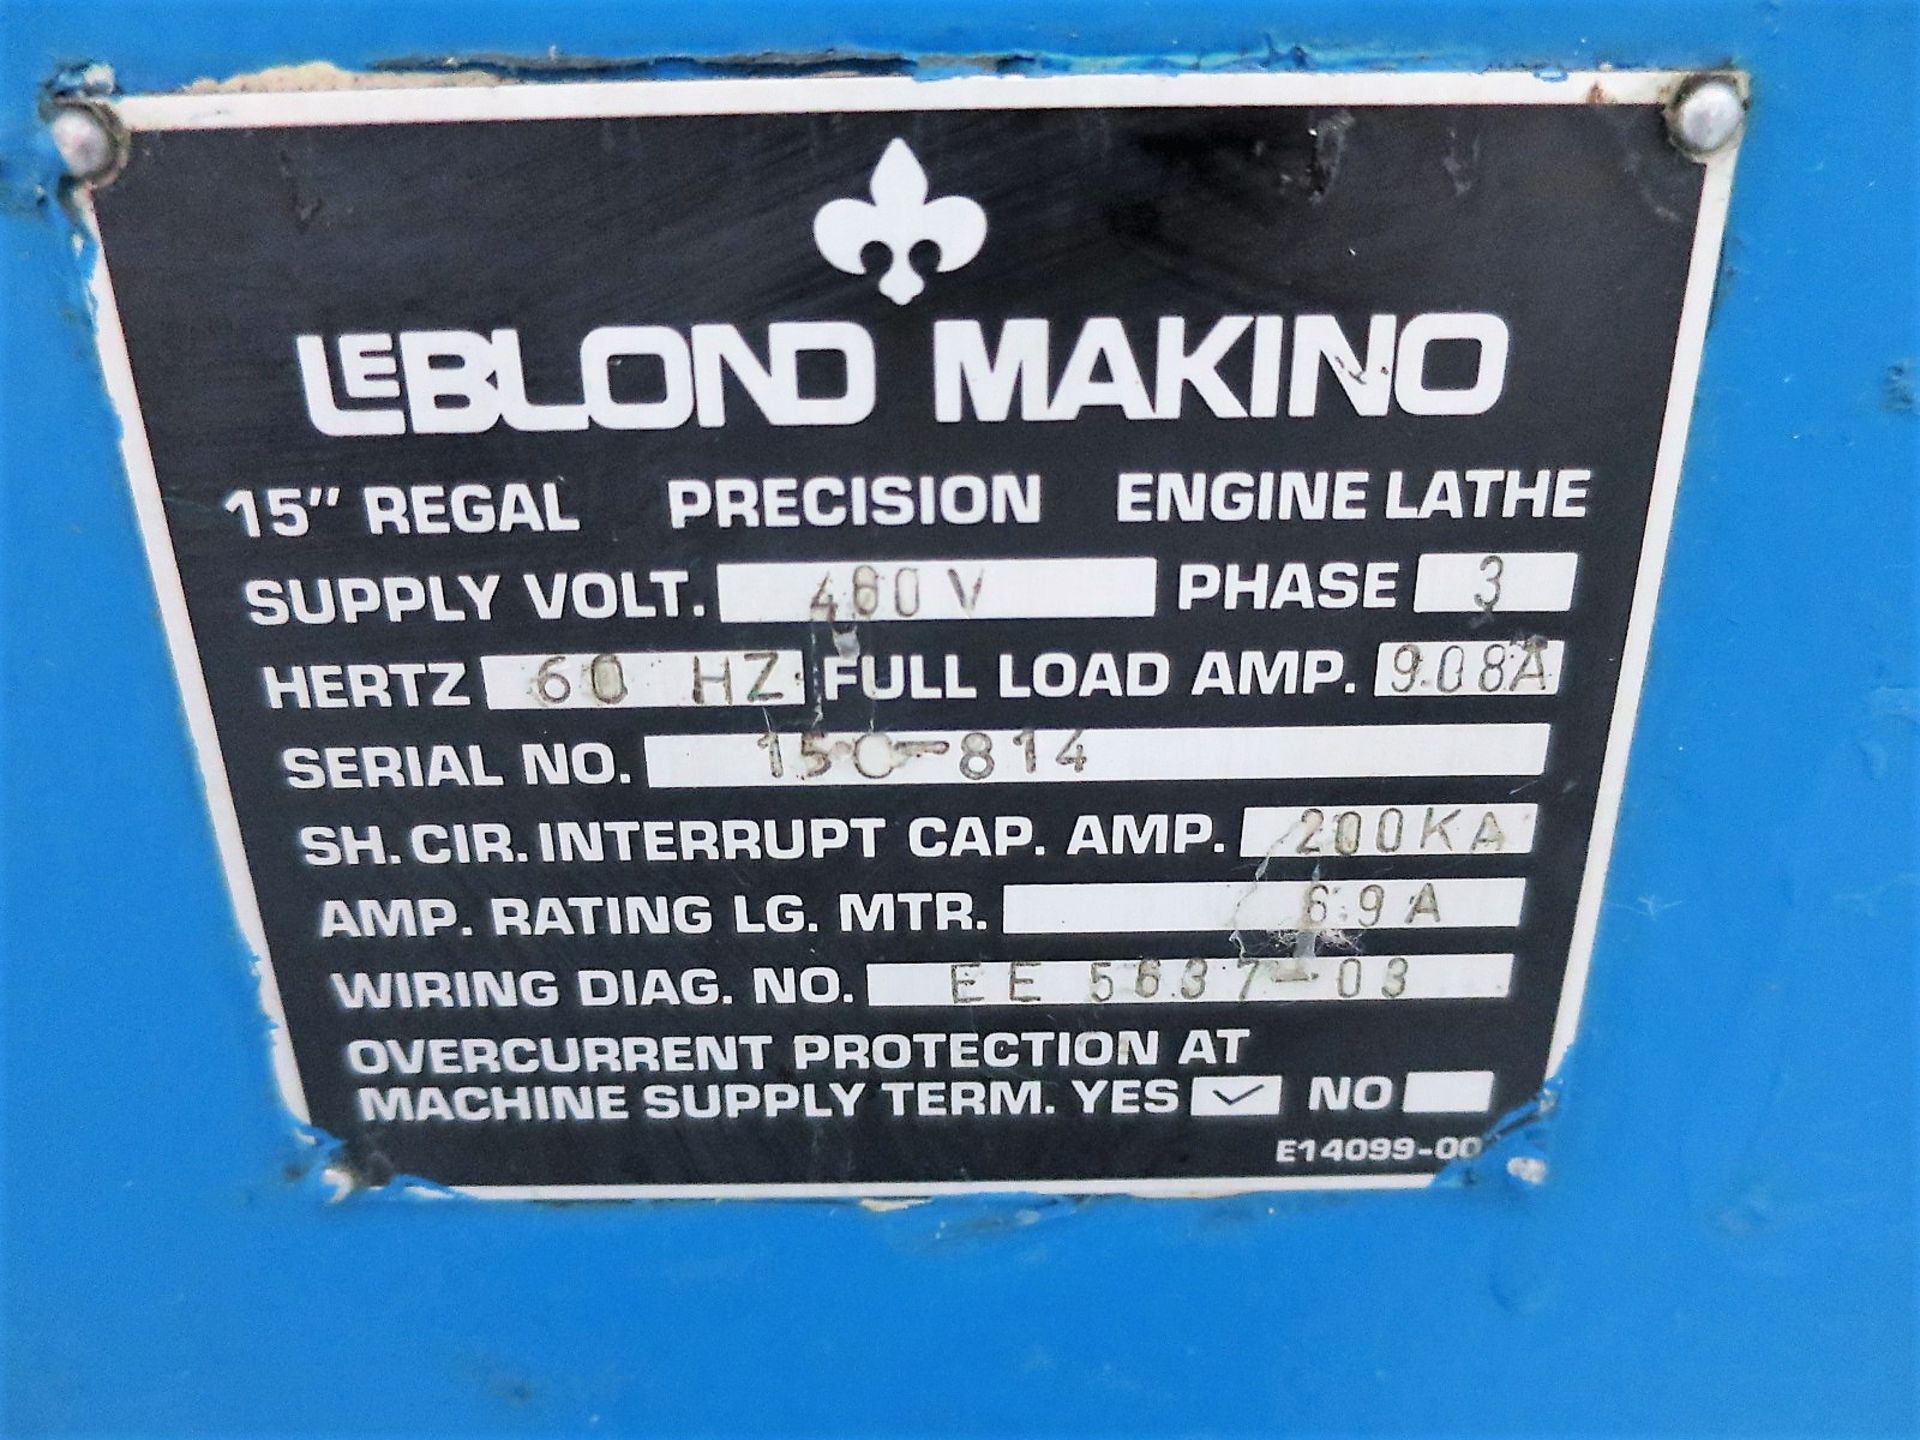 15" x 54" Leblond Regal Tool Room Precision Engine Lathe, S/N 15C-814 - Image 7 of 8